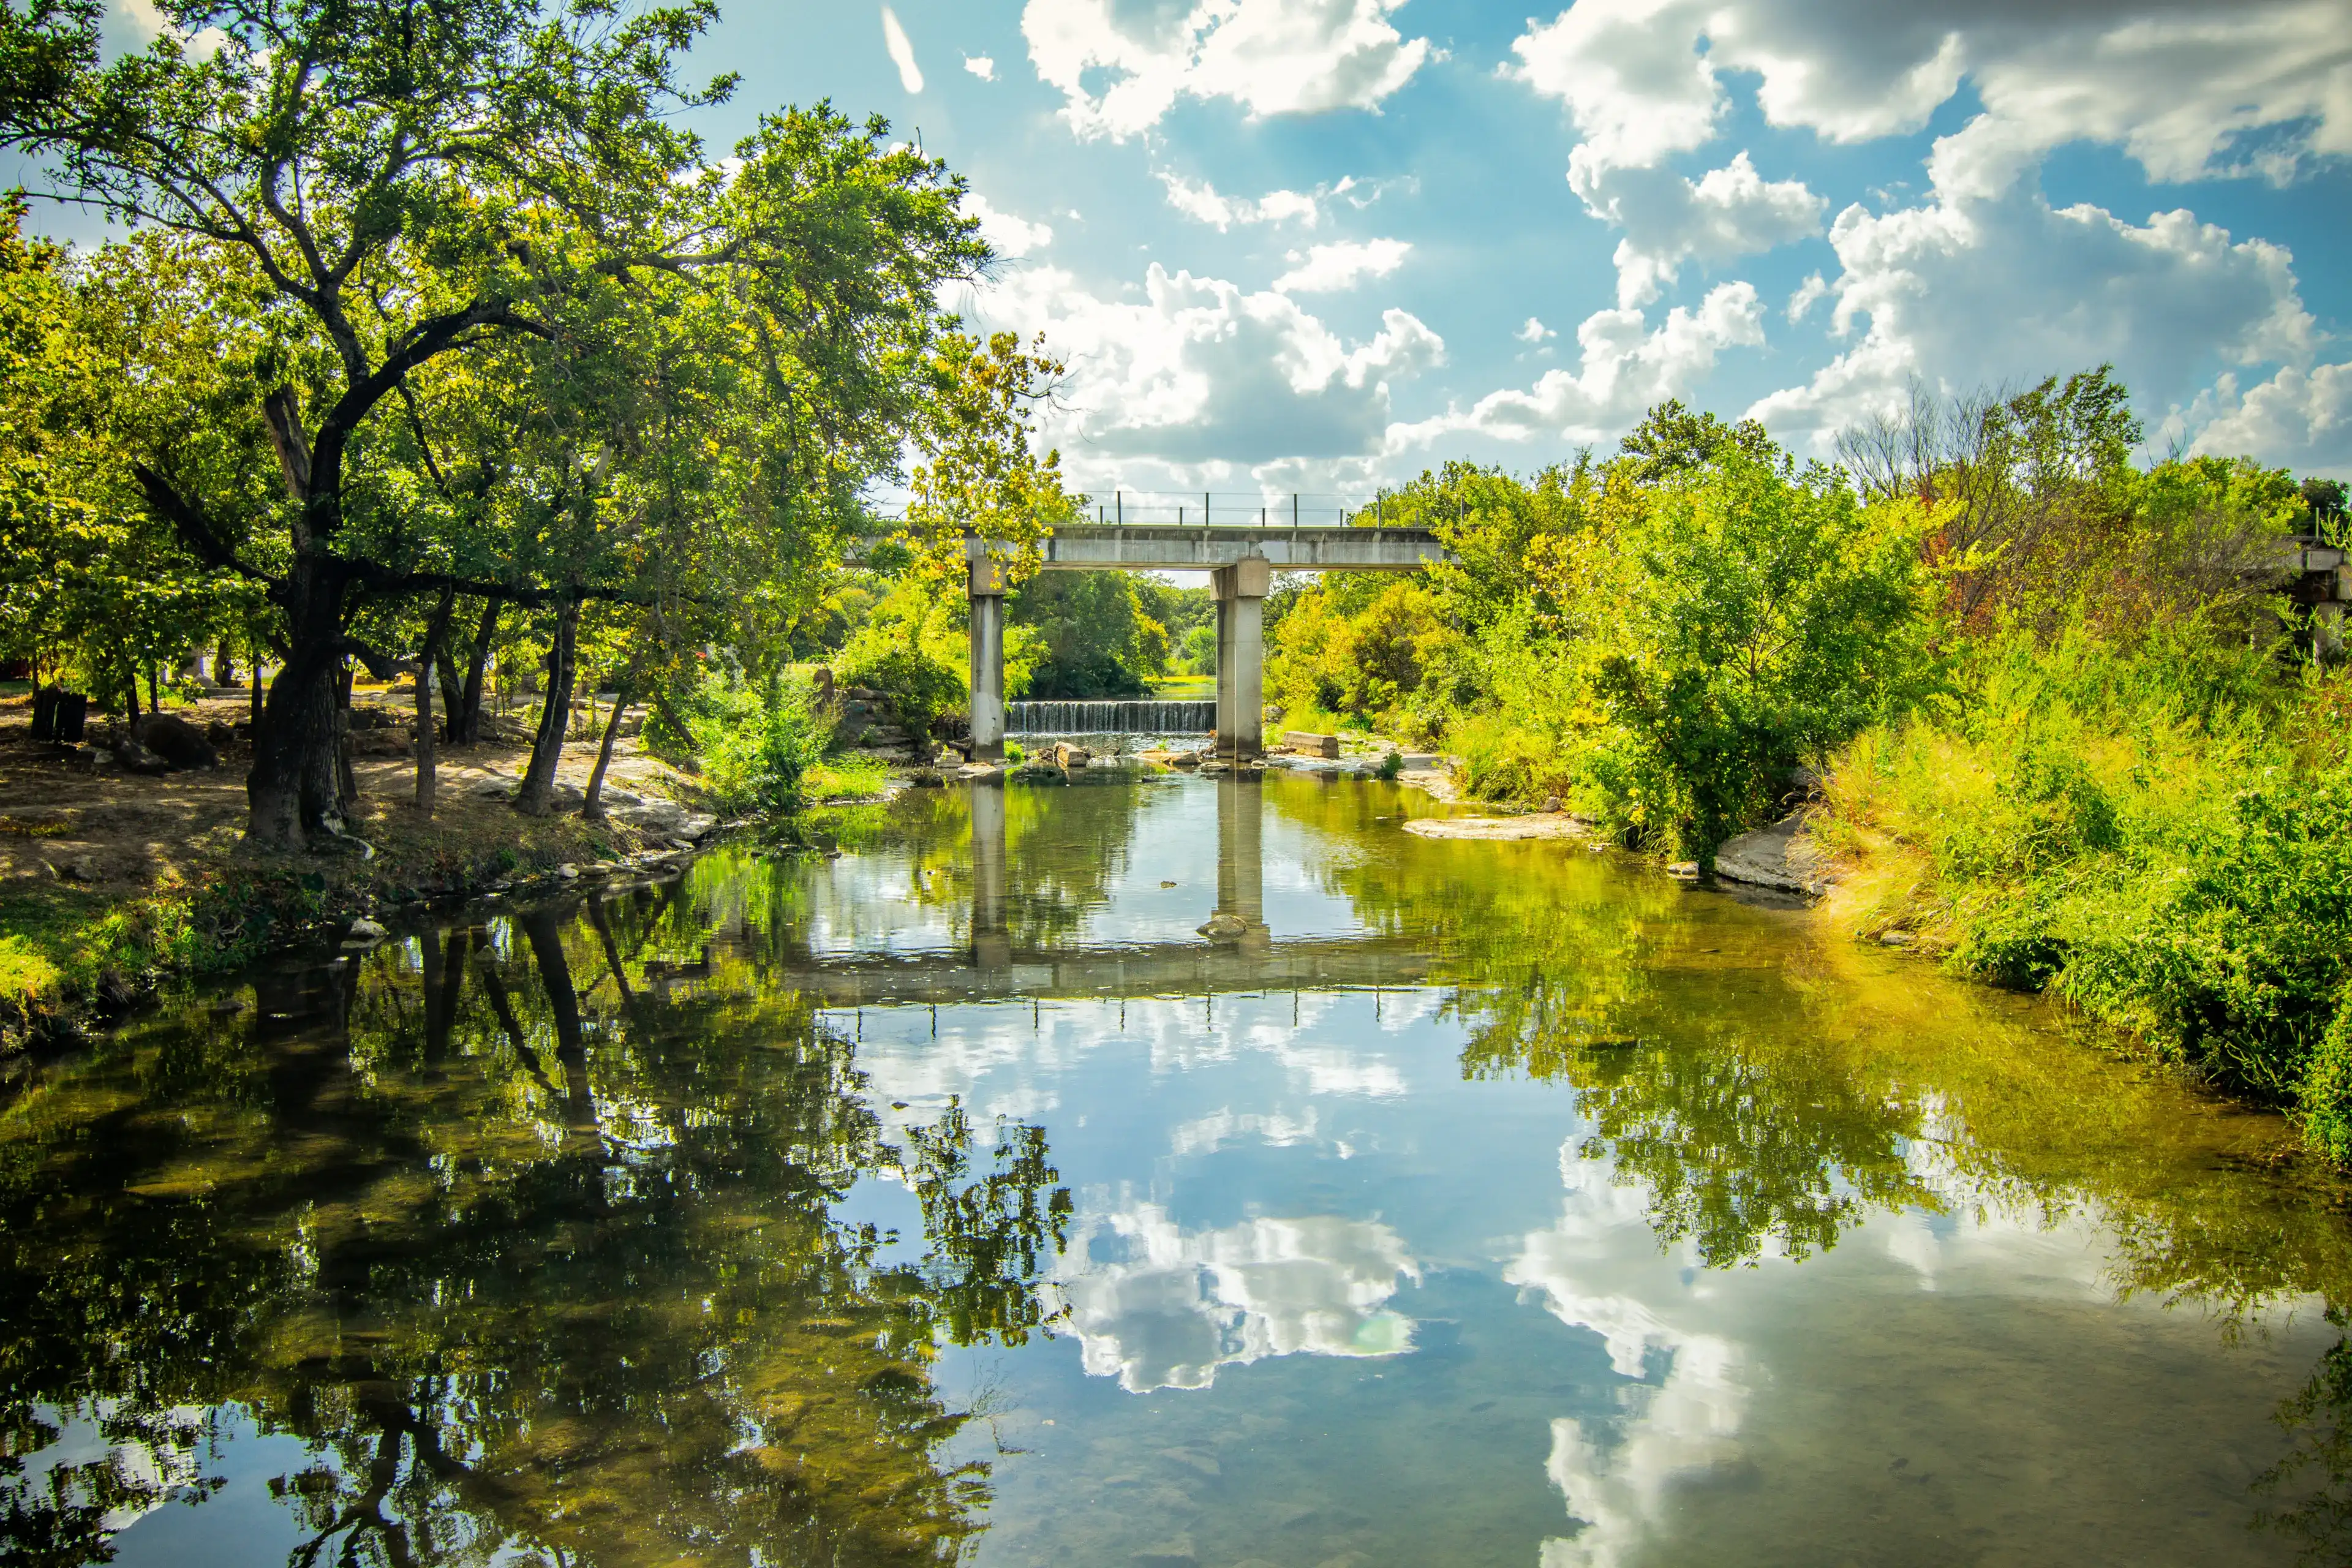 Historic Round Rock at Bushy Creek, namesake of the City of Round Round, Texas, USA